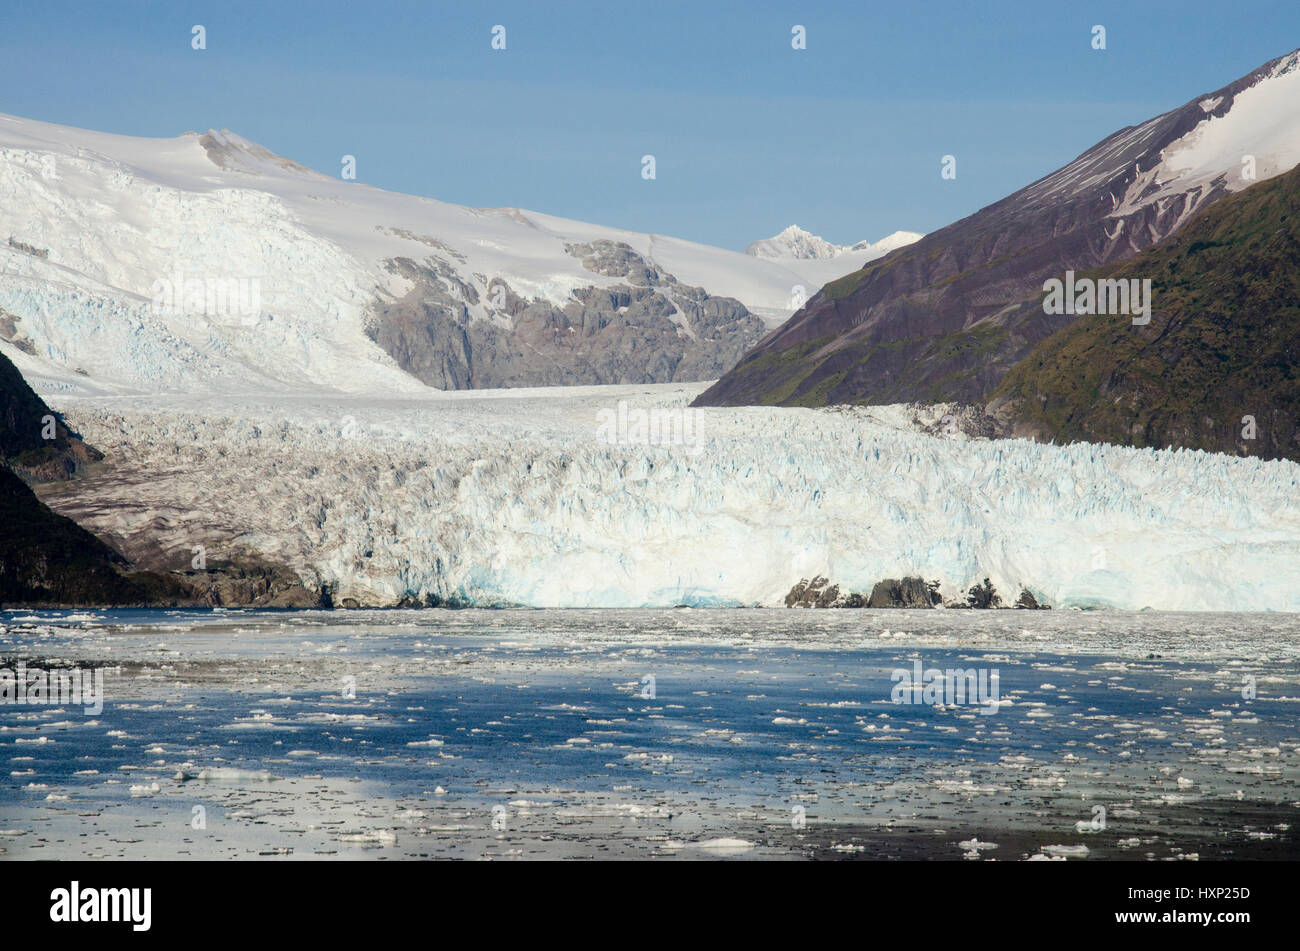 Chile - Amalia Glacier On The Edge Of The Sarmiento Channel - Skua Glacier - Bernardo O'Higgins National Park Stock Photo